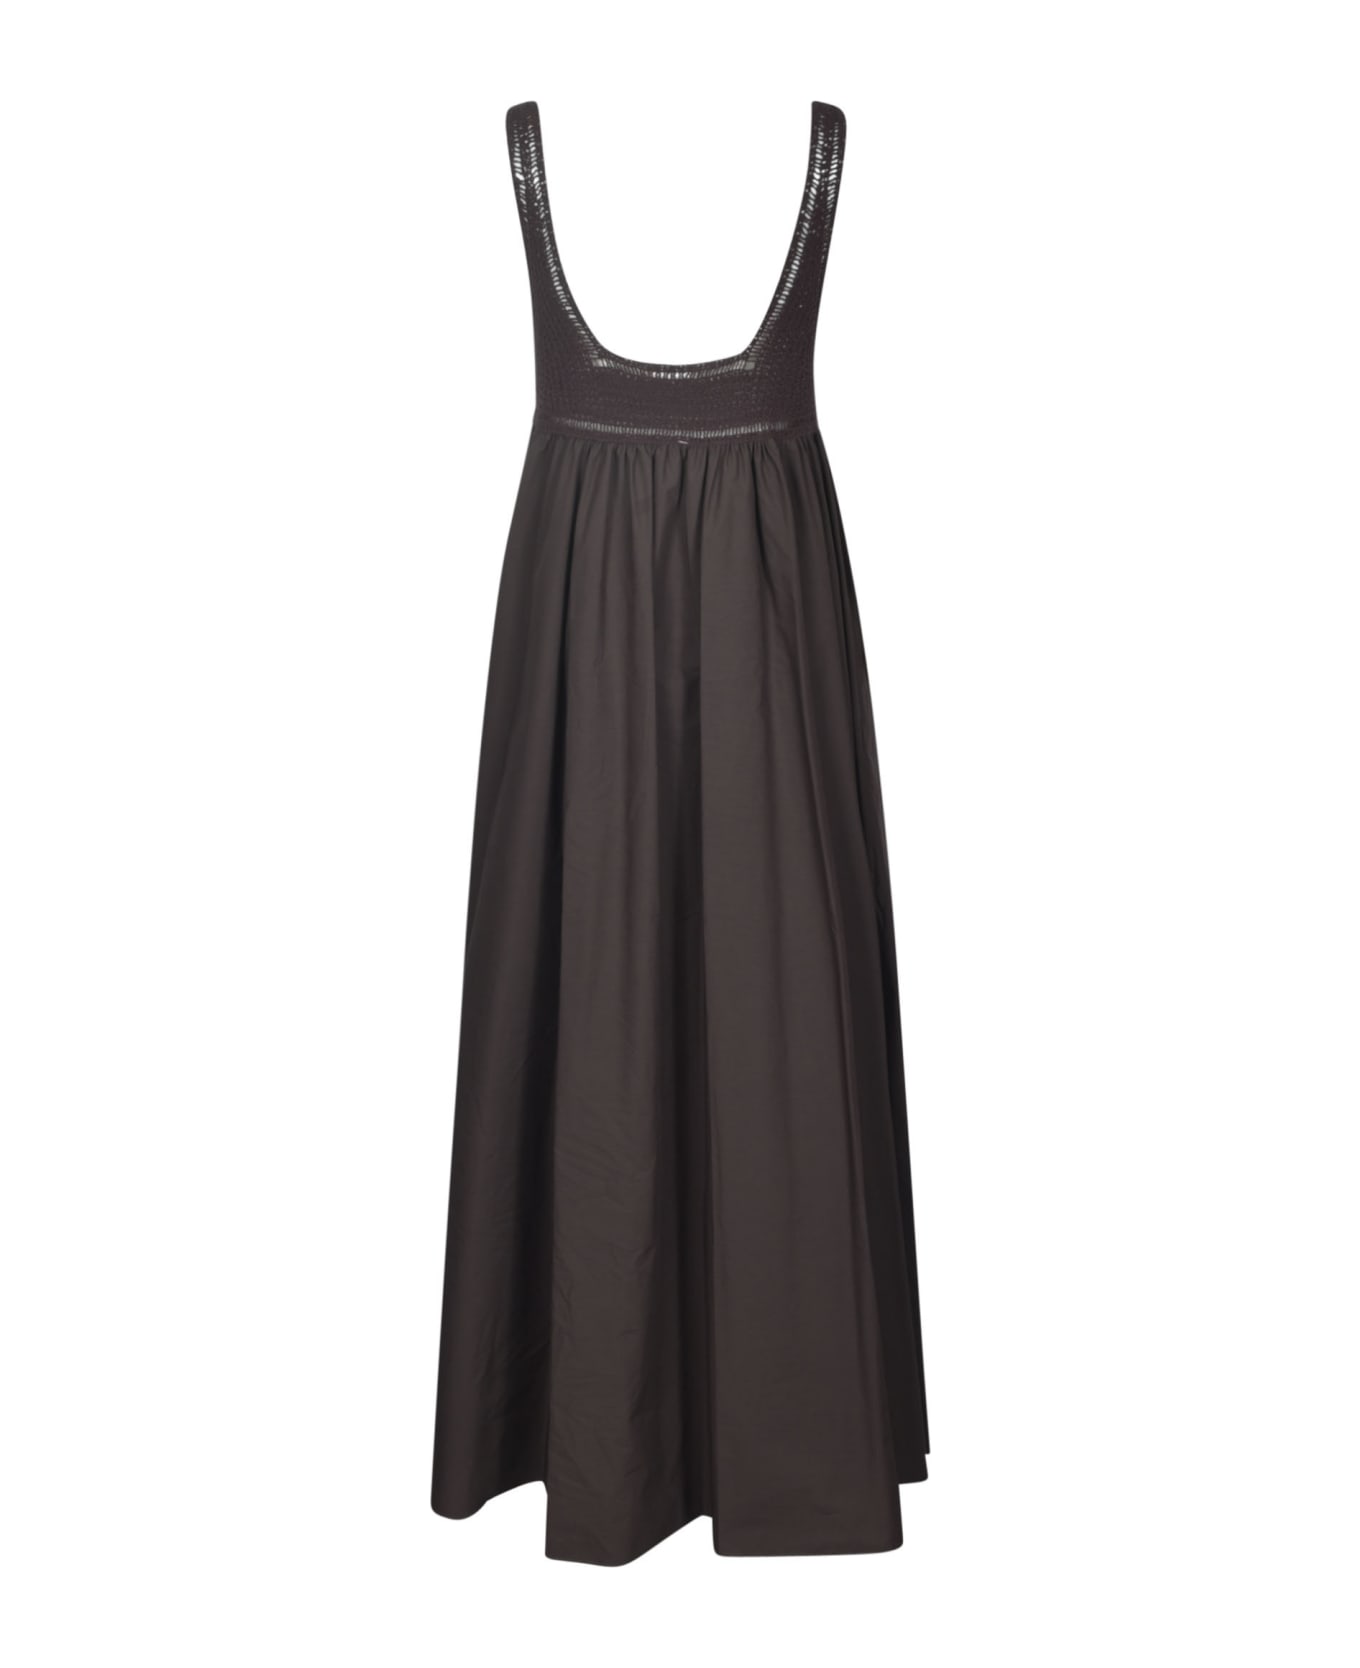 Parosh Crochet Sleeveless Dress - Brown